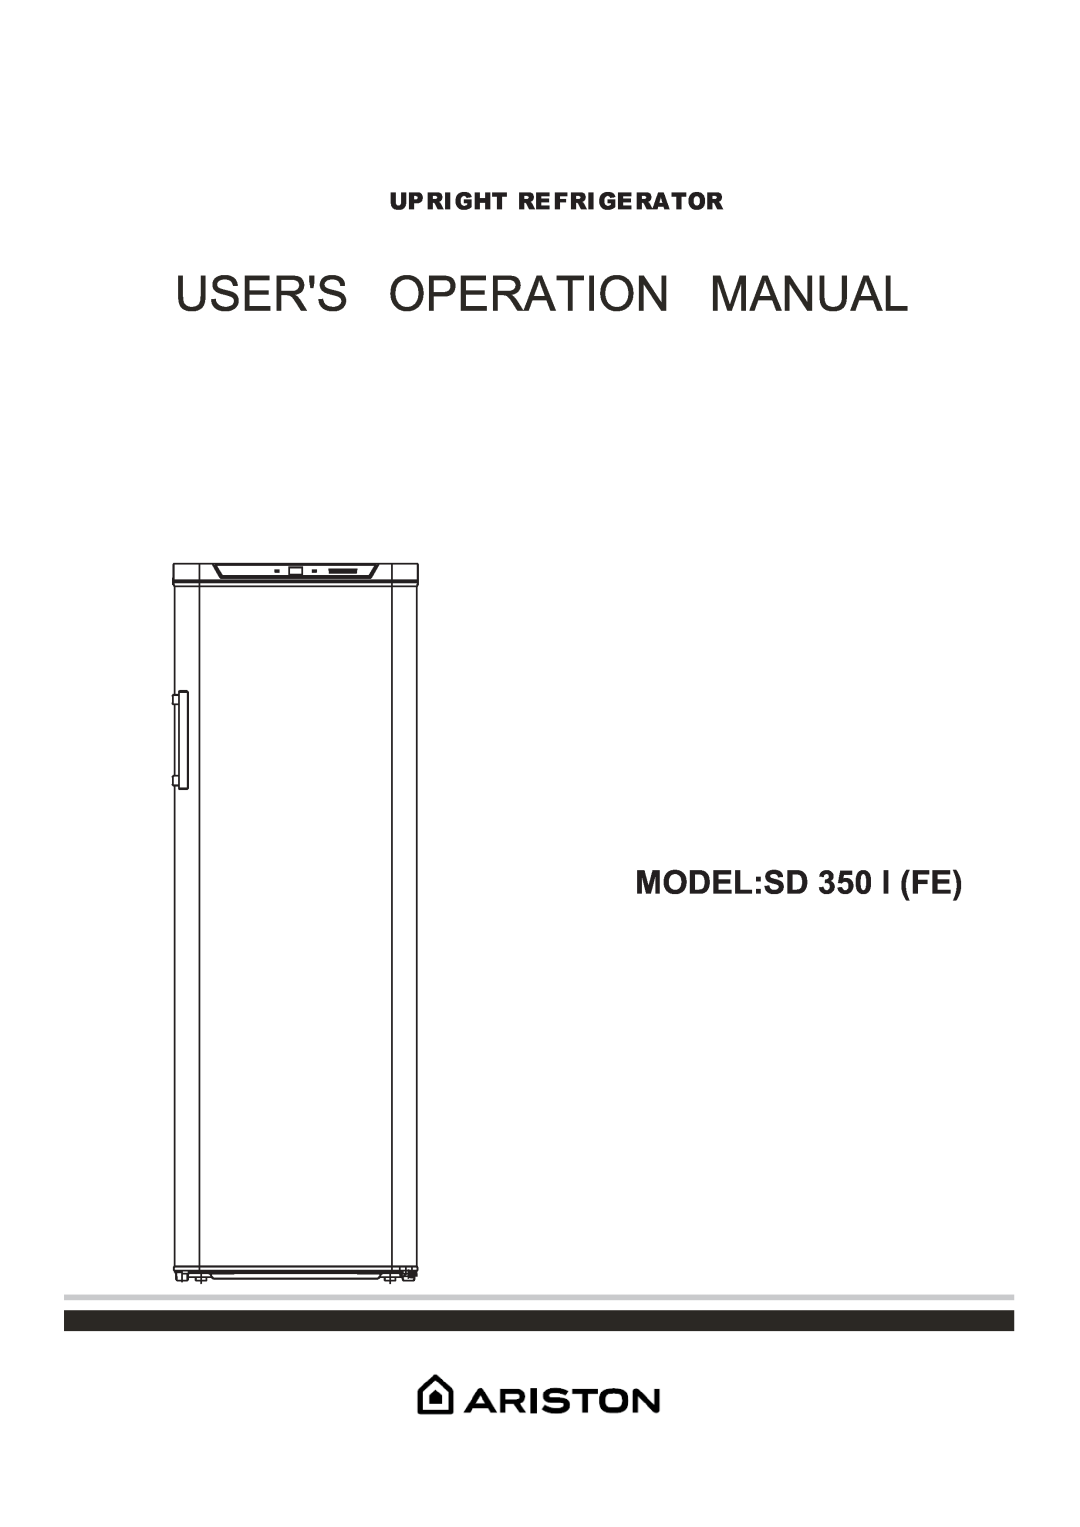 Ariston SD 350 I (FE) manual Upright Refrigerator, MODELSD 350 I FE 